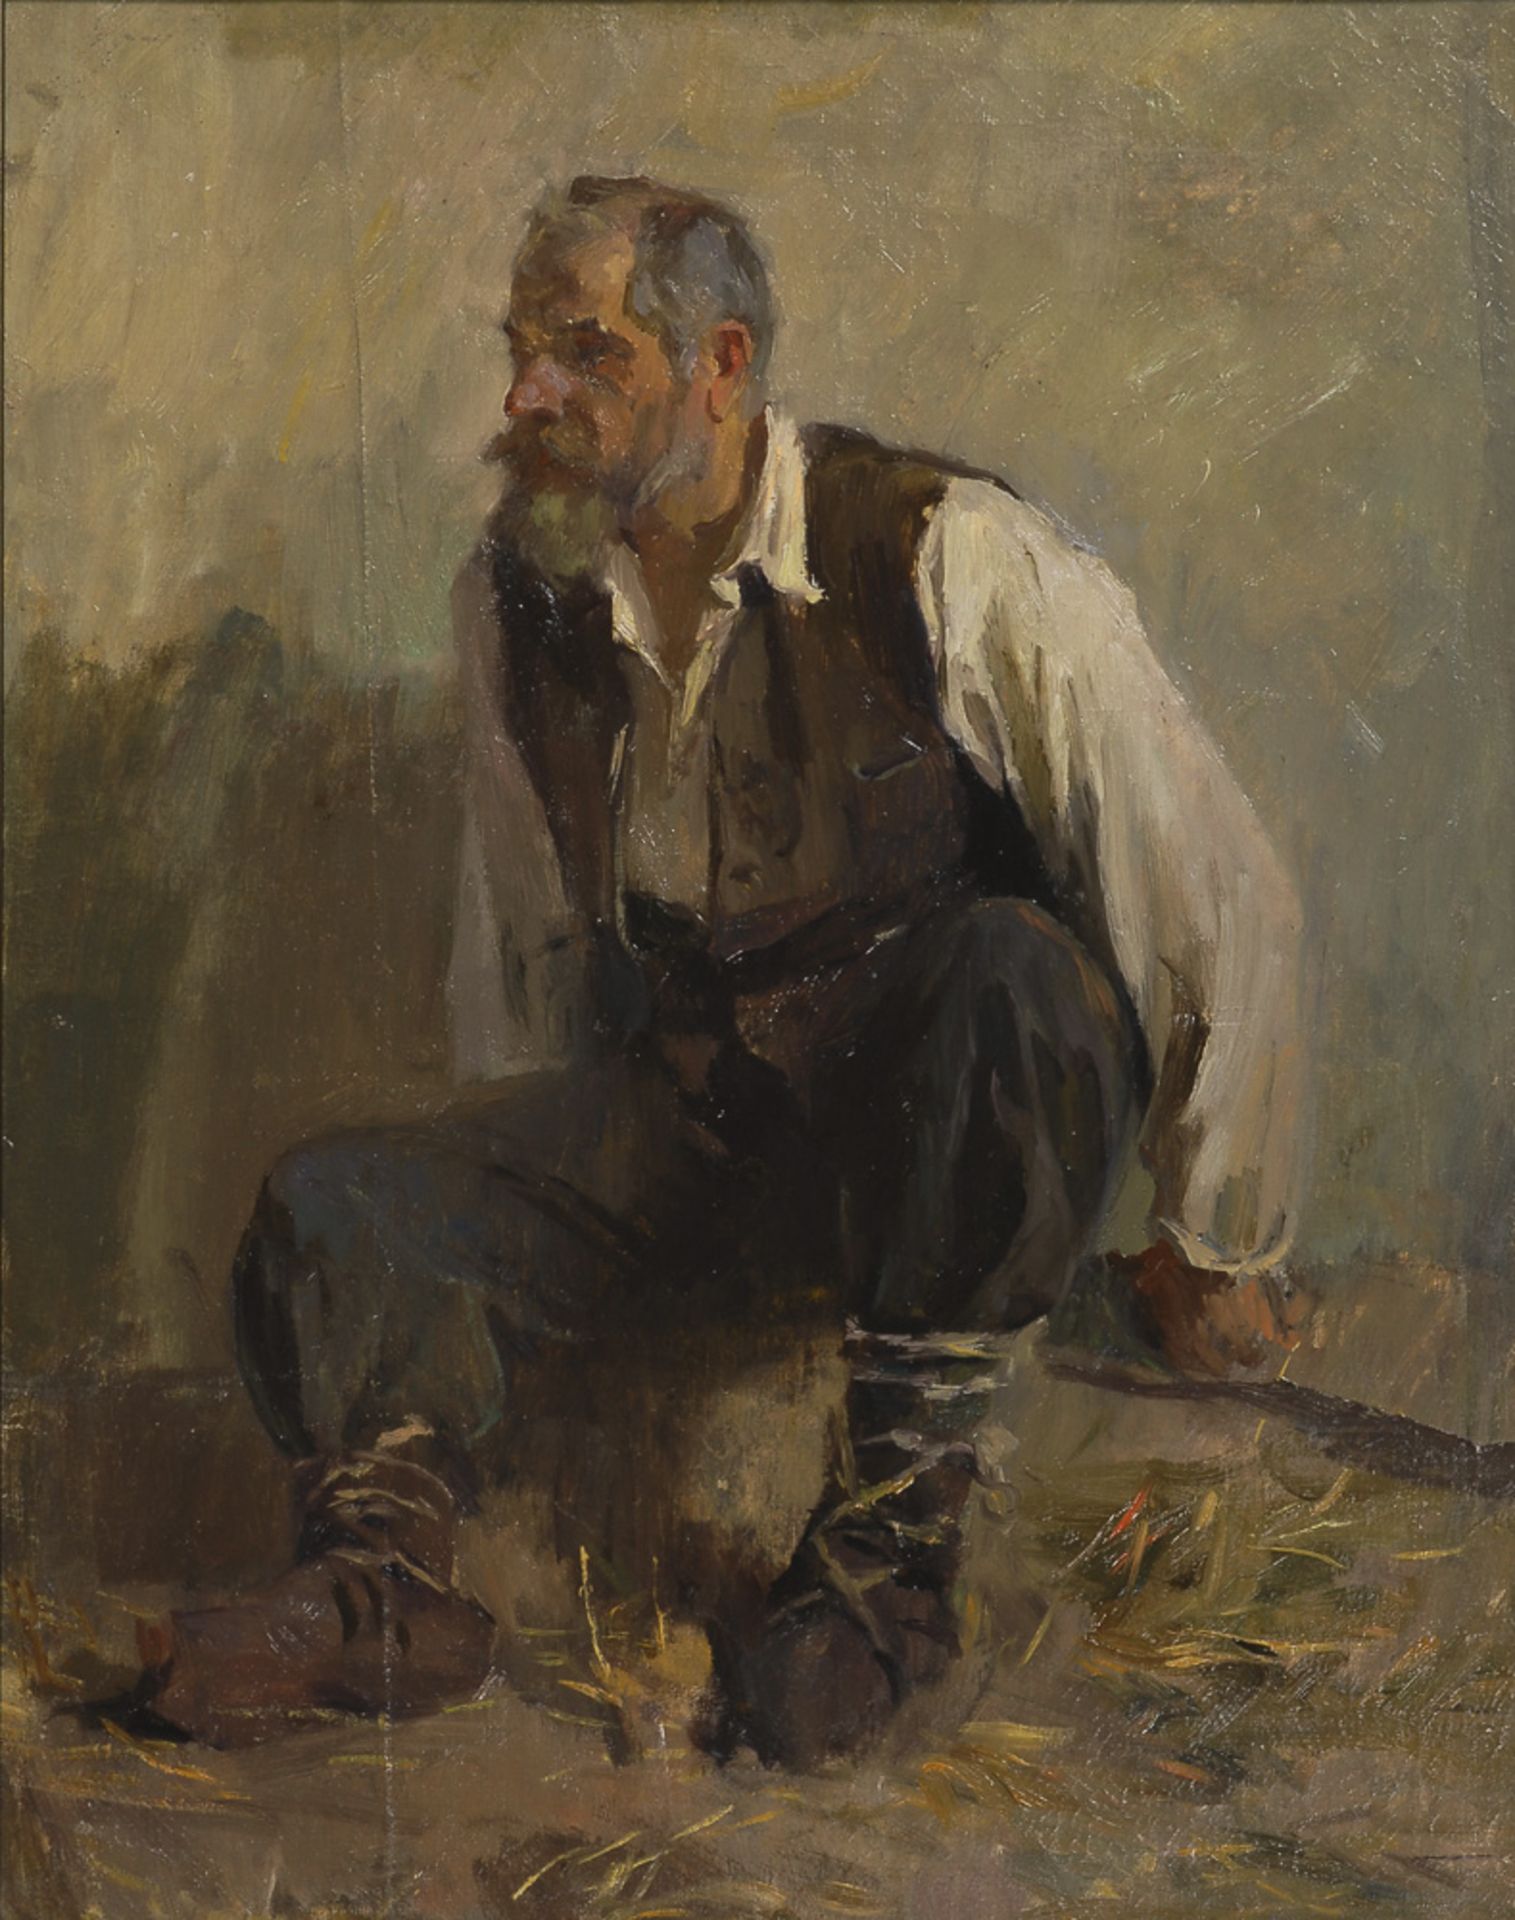 Russischer Maler: Sitzender Bauer.Öl/Leinwand, unsigniert, verso kyrillischer Schriftzug. 58 x 47